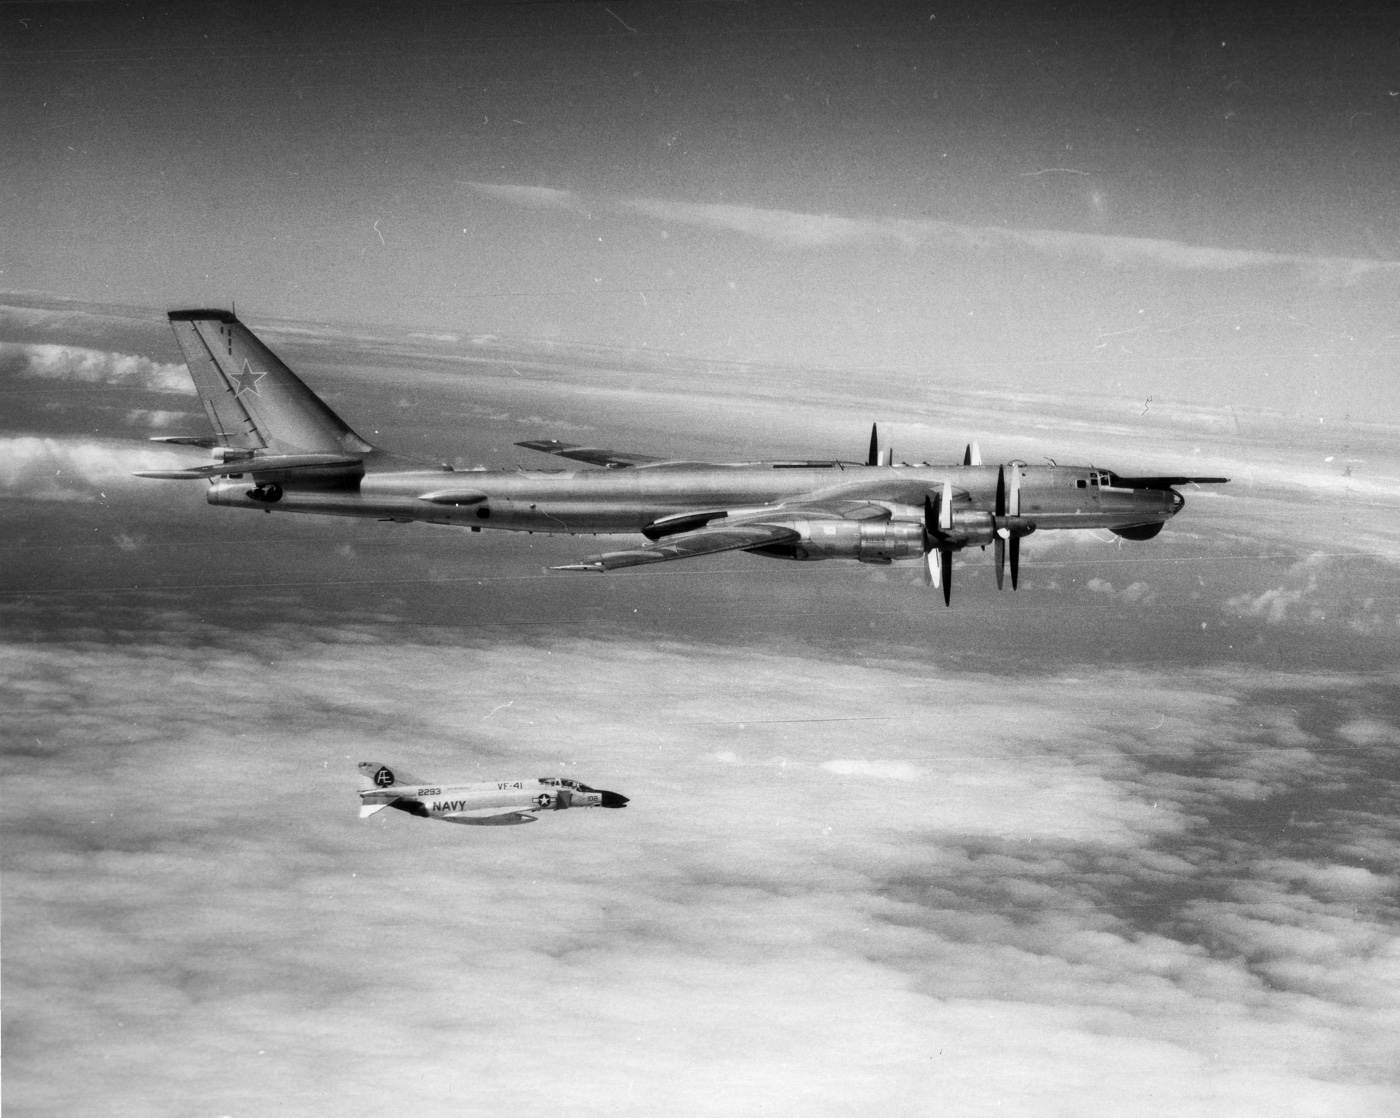 f-4 shadows a soviet bear bomber over the atlantic ocean